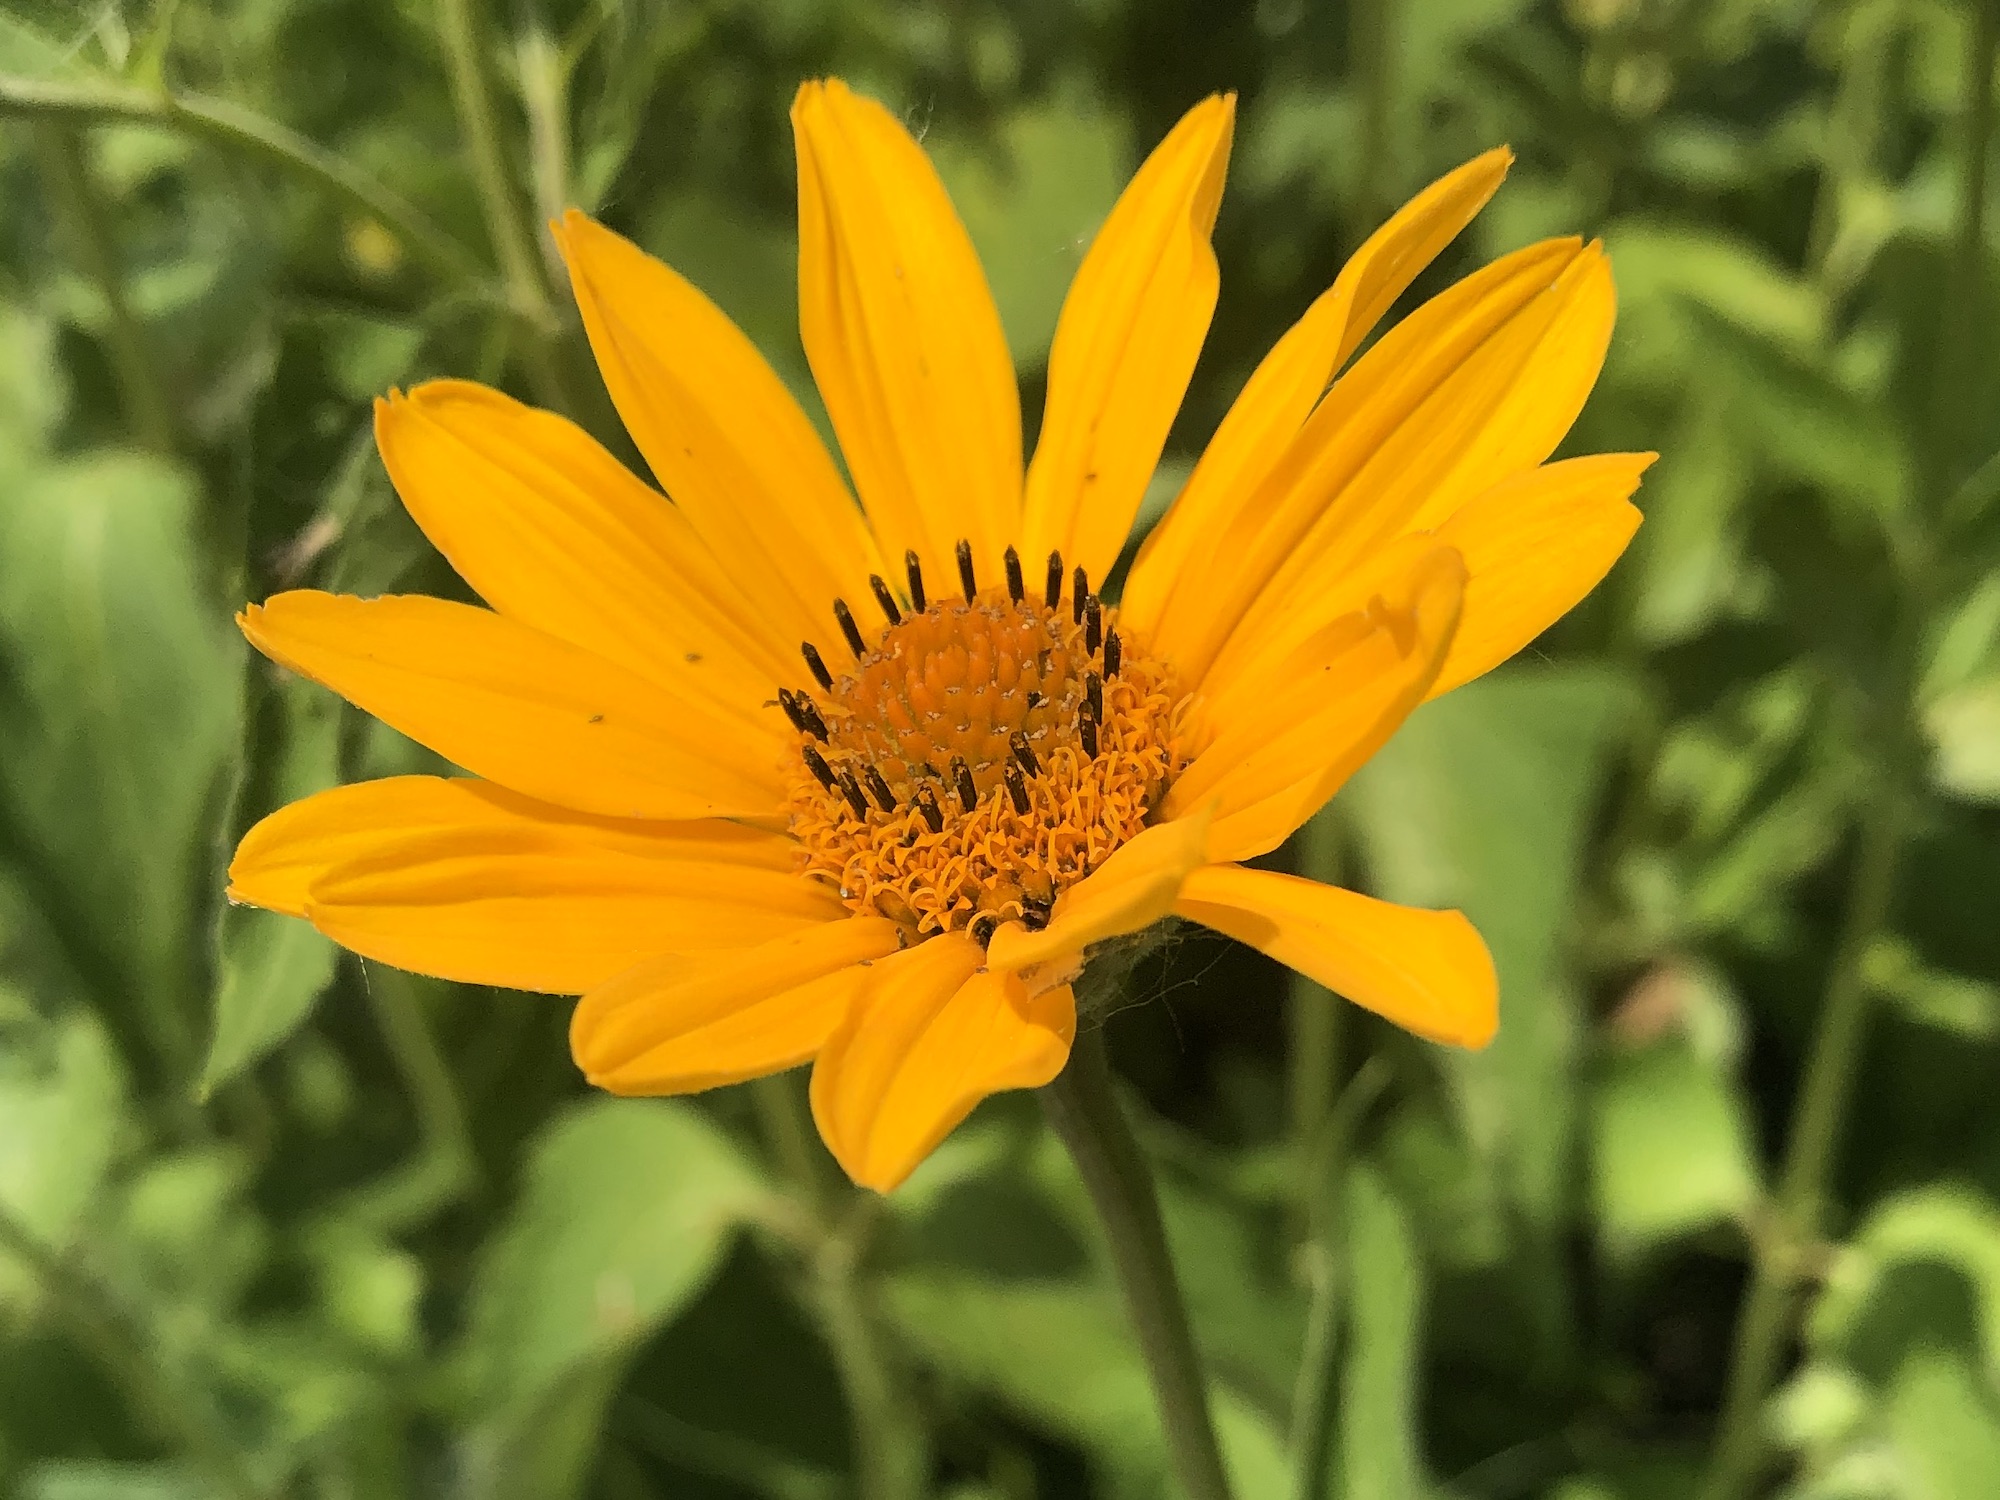 False Sunflower in Oak Savanna in Madison, Wisconsin on June 24, 2022.